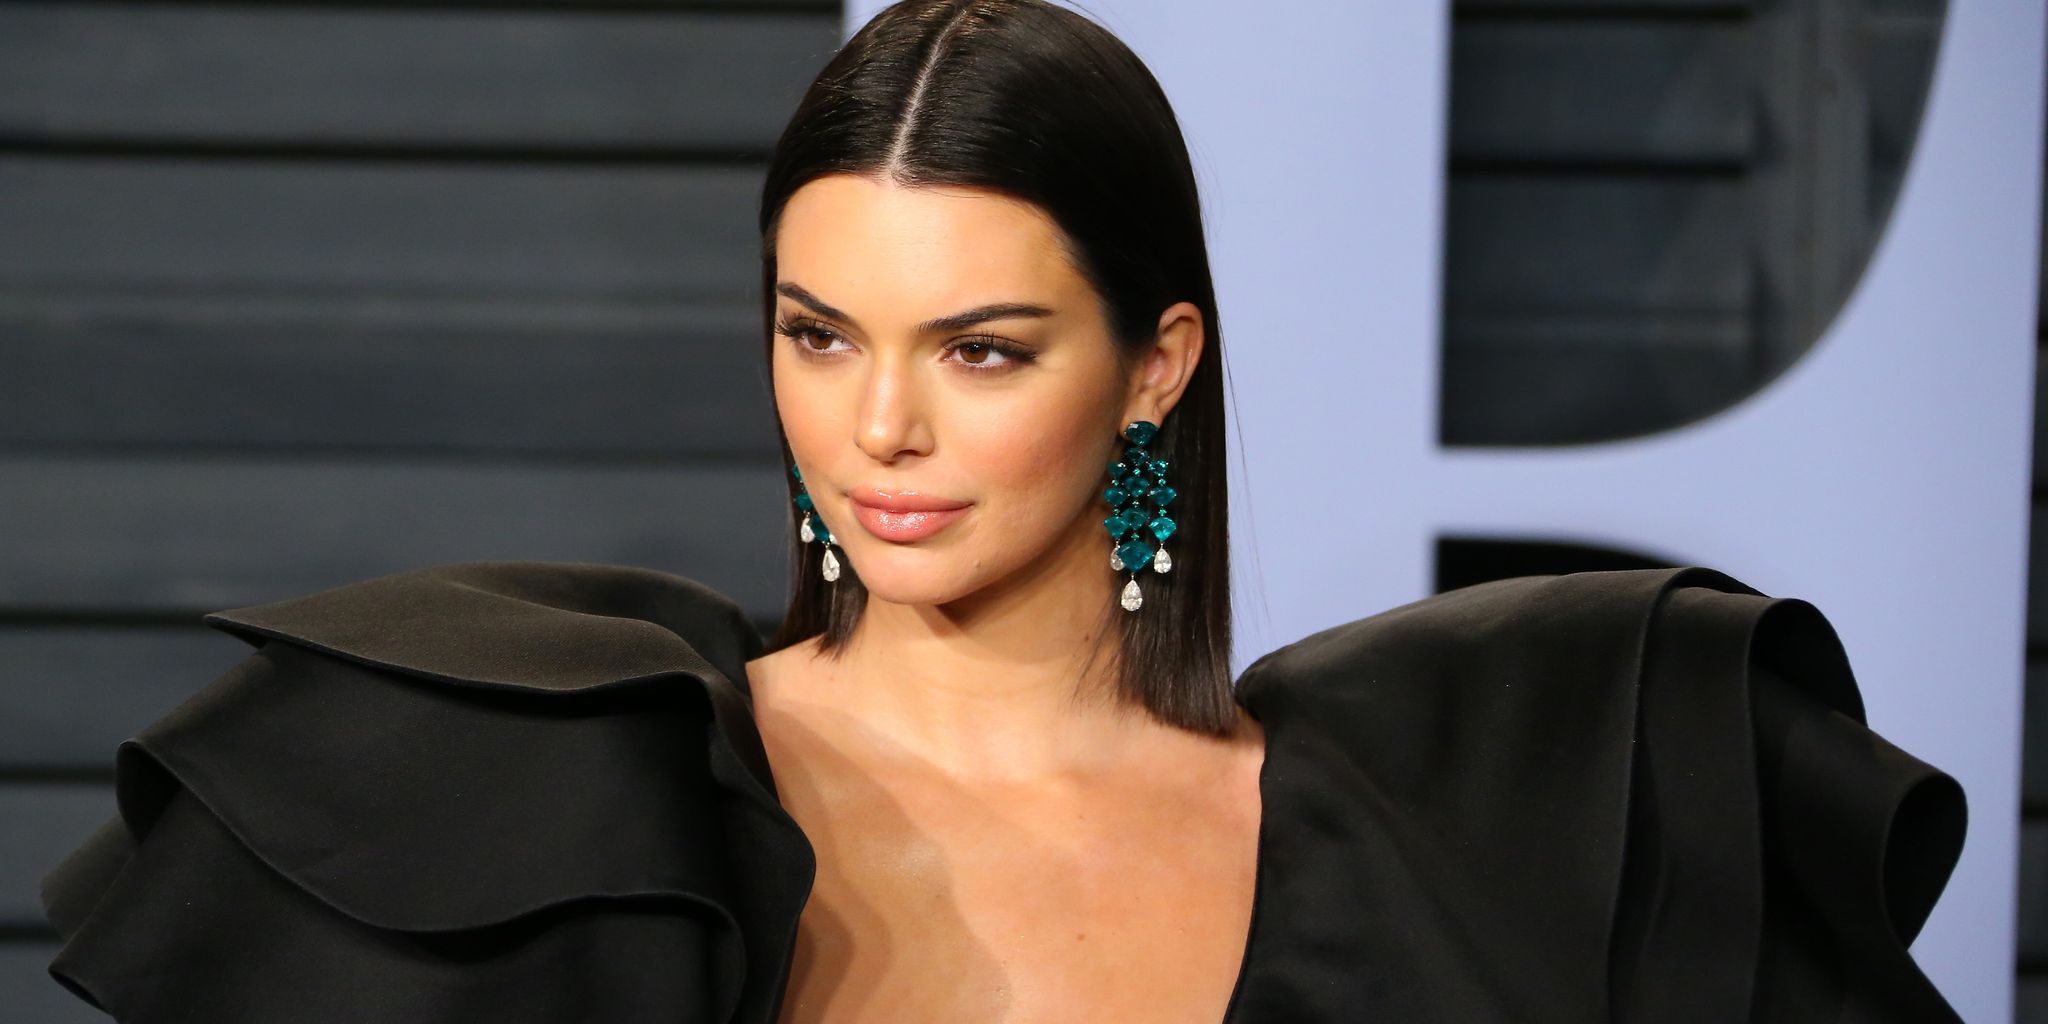 Kendall Jenner revives Chanel's 2.55 ankle bag